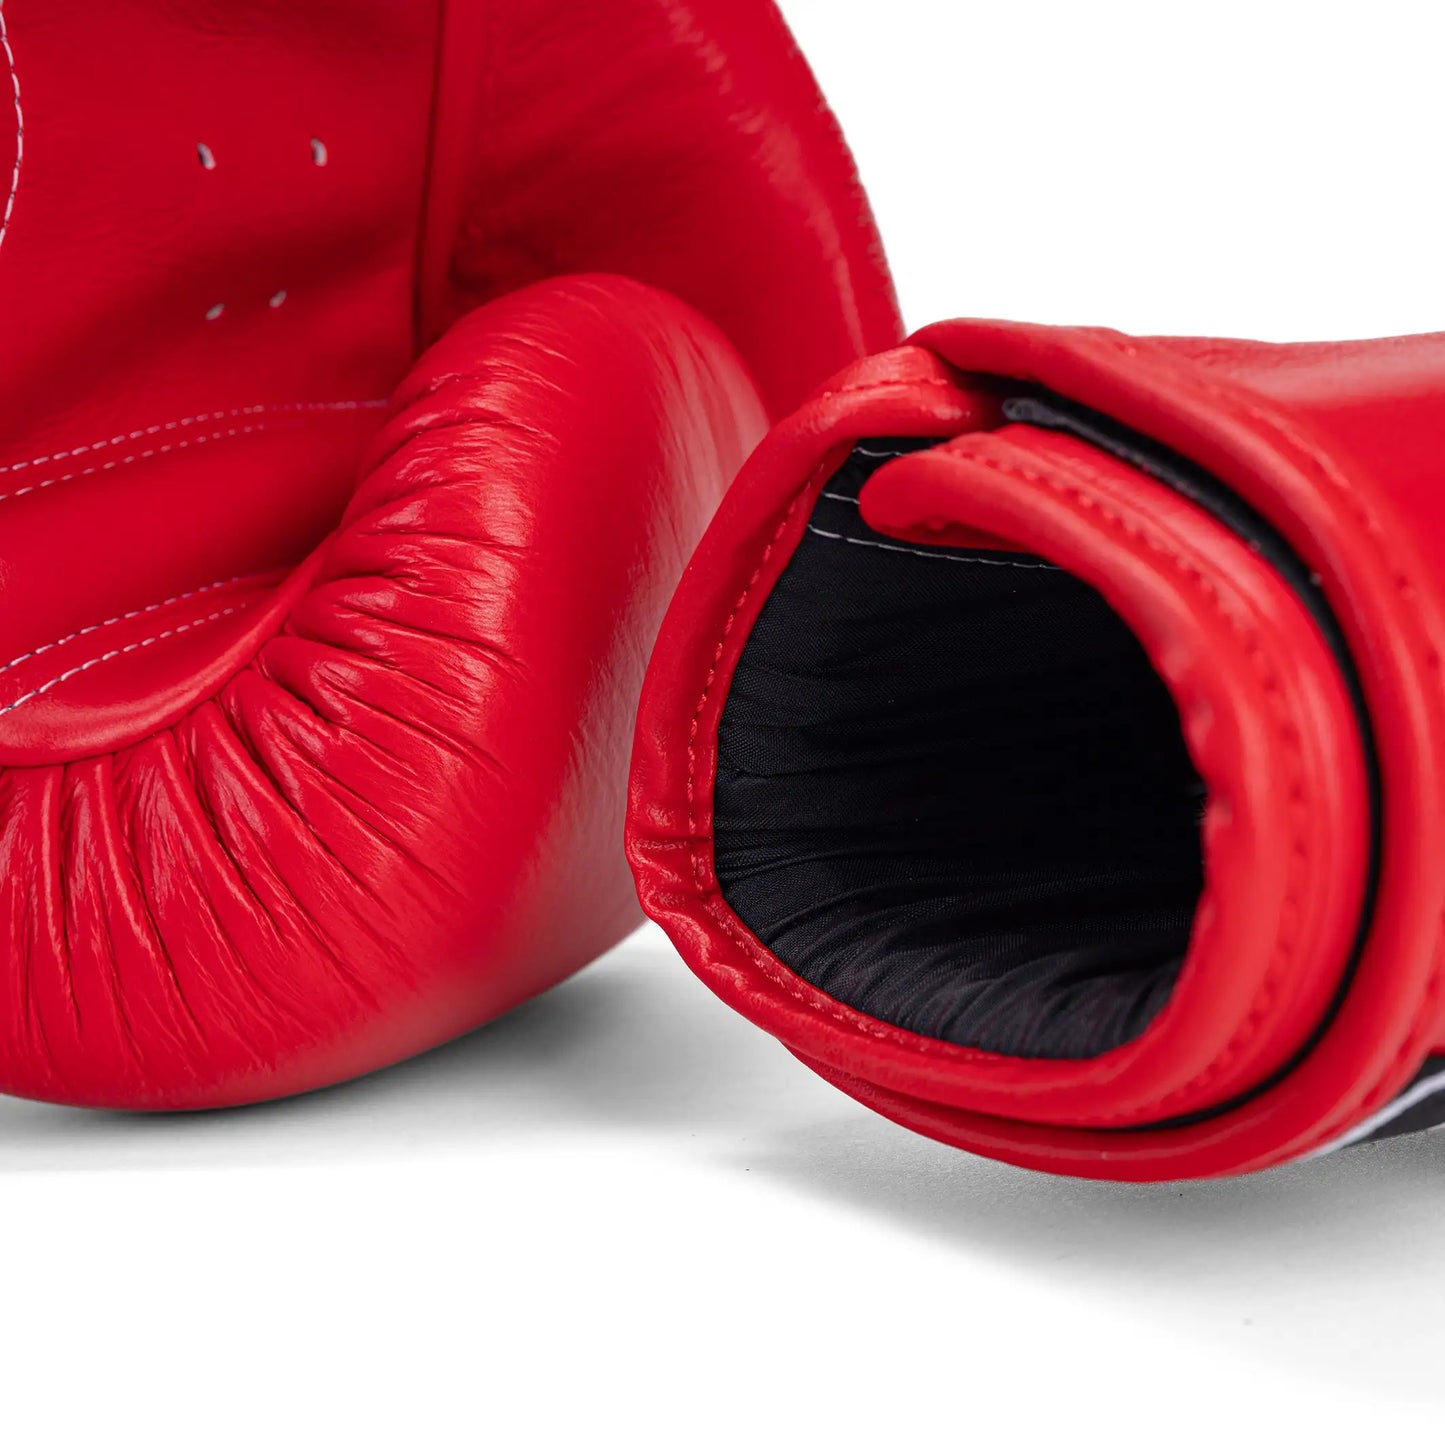 Boxhandschuhe Ragnarok Sports Rot